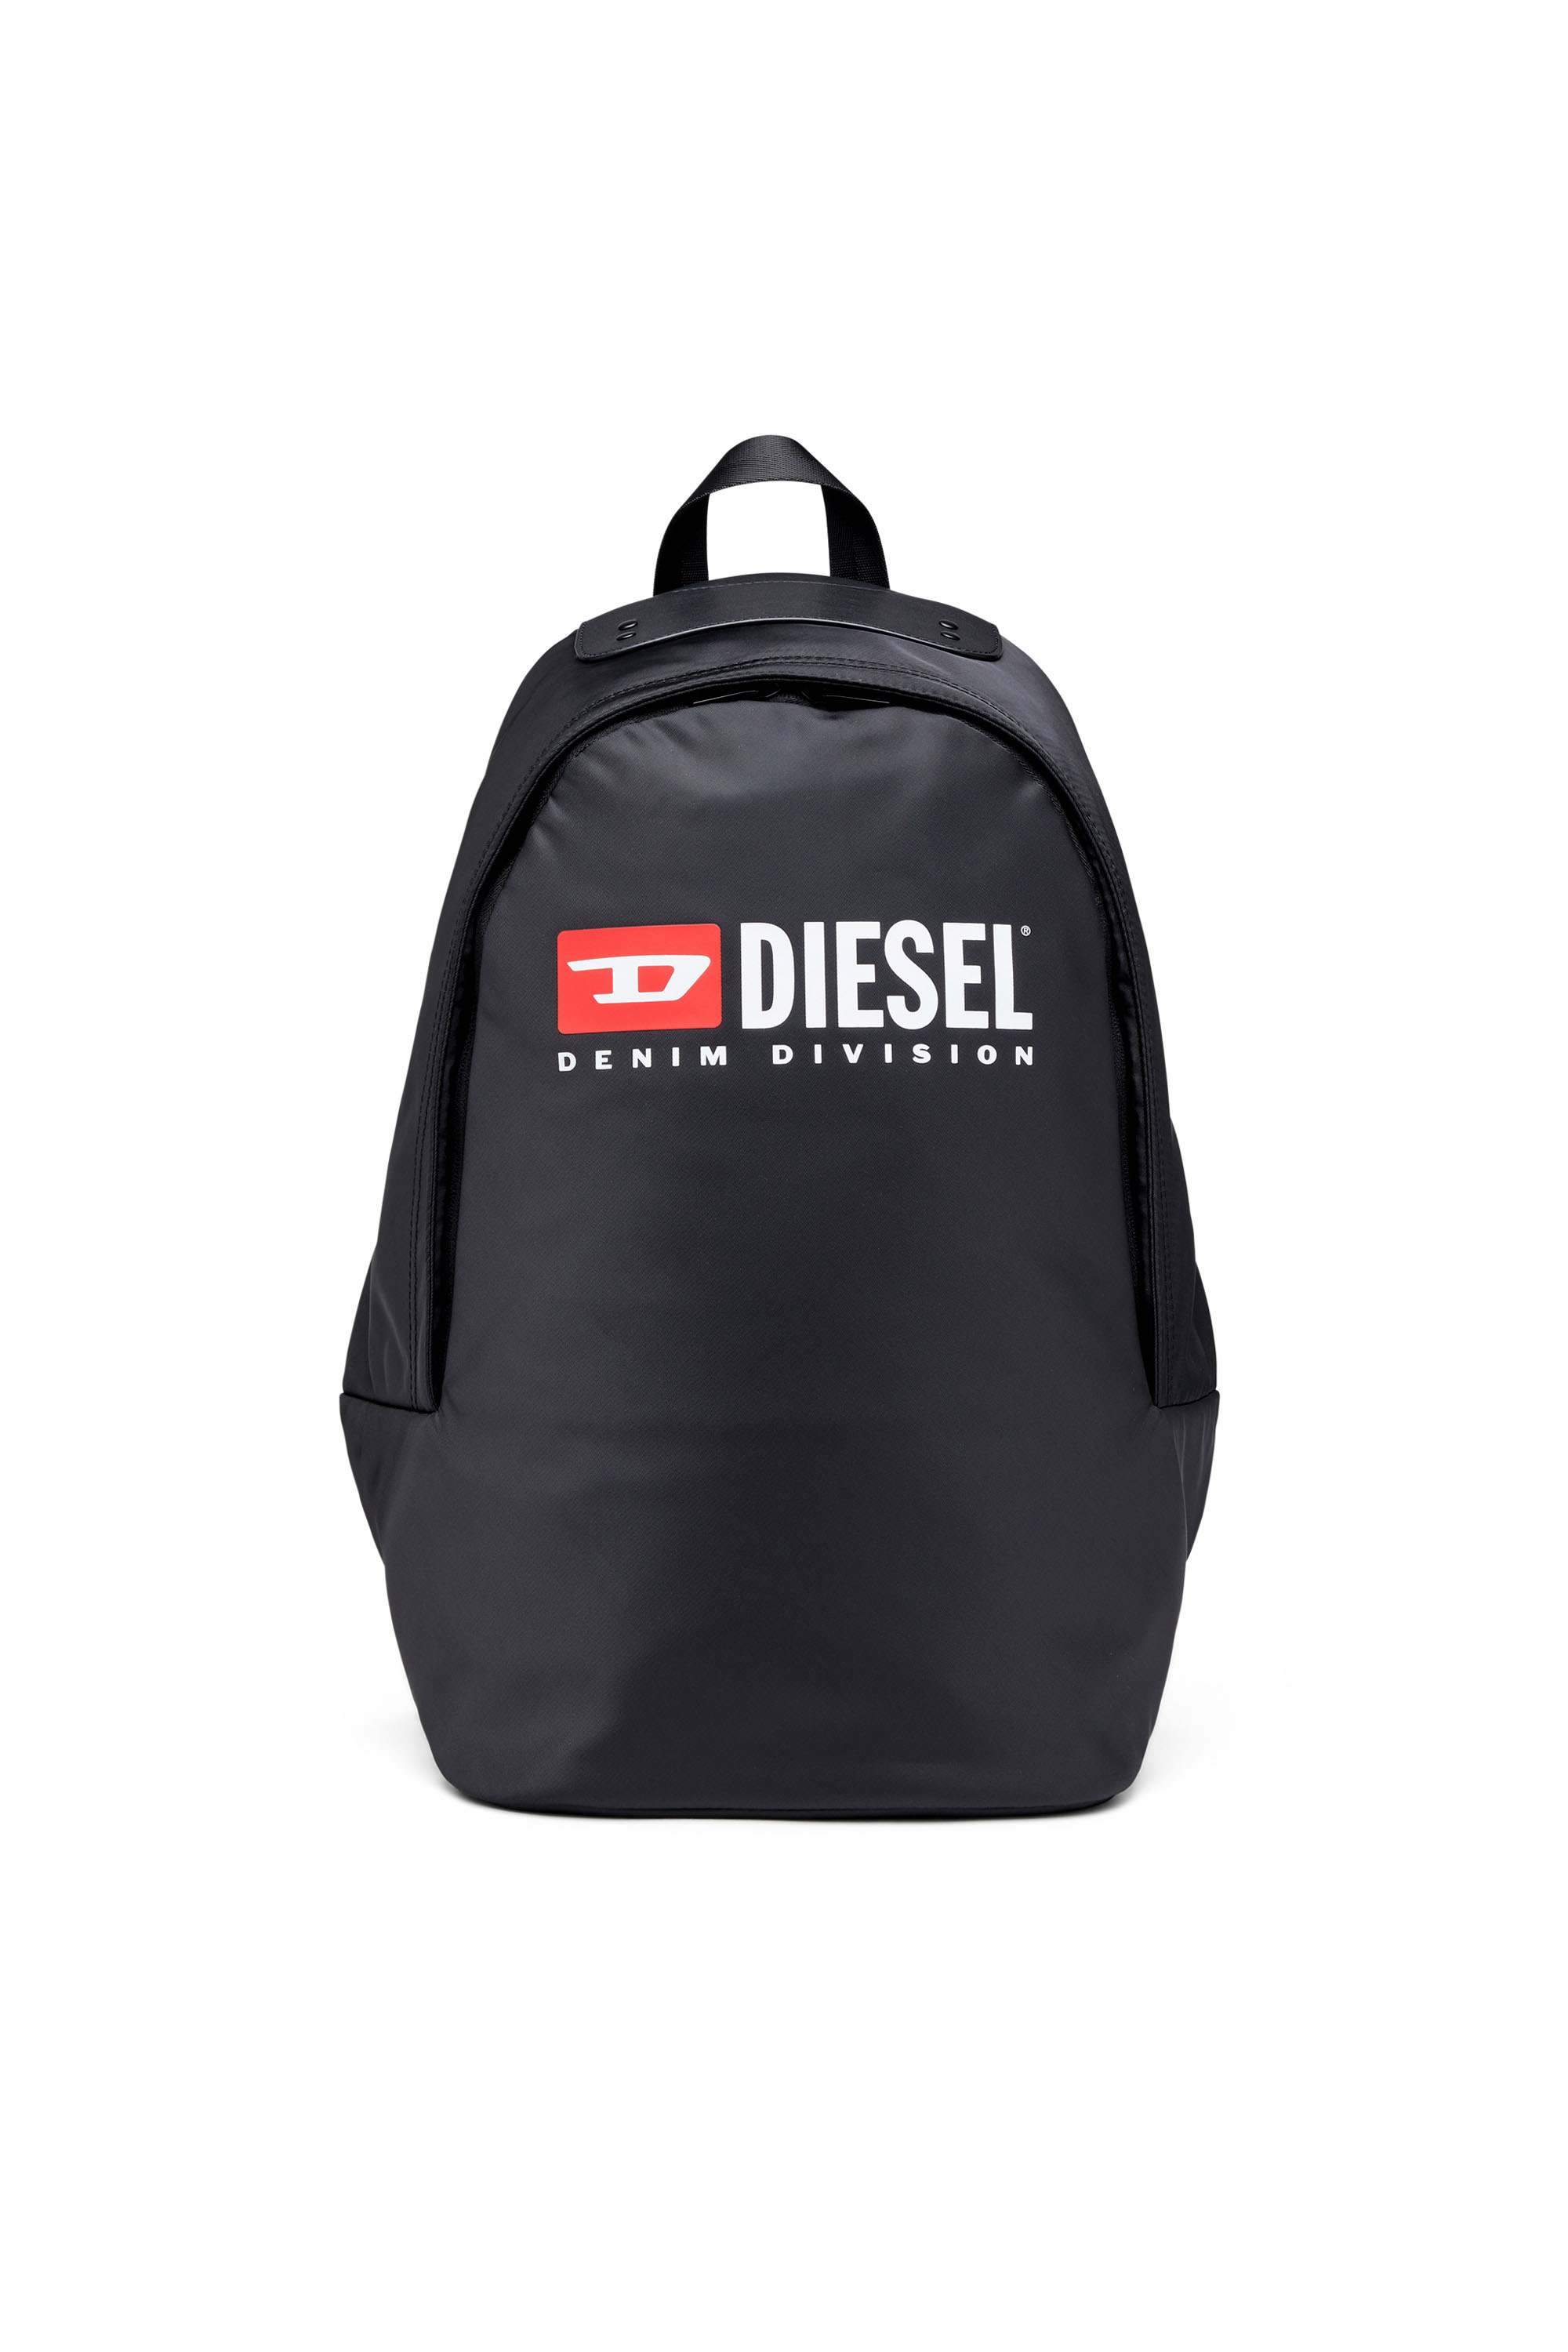 Diesel - Rinke Backpack - Mochila de tejido técnico con logotipo - Mochilas - Hombre - Negro